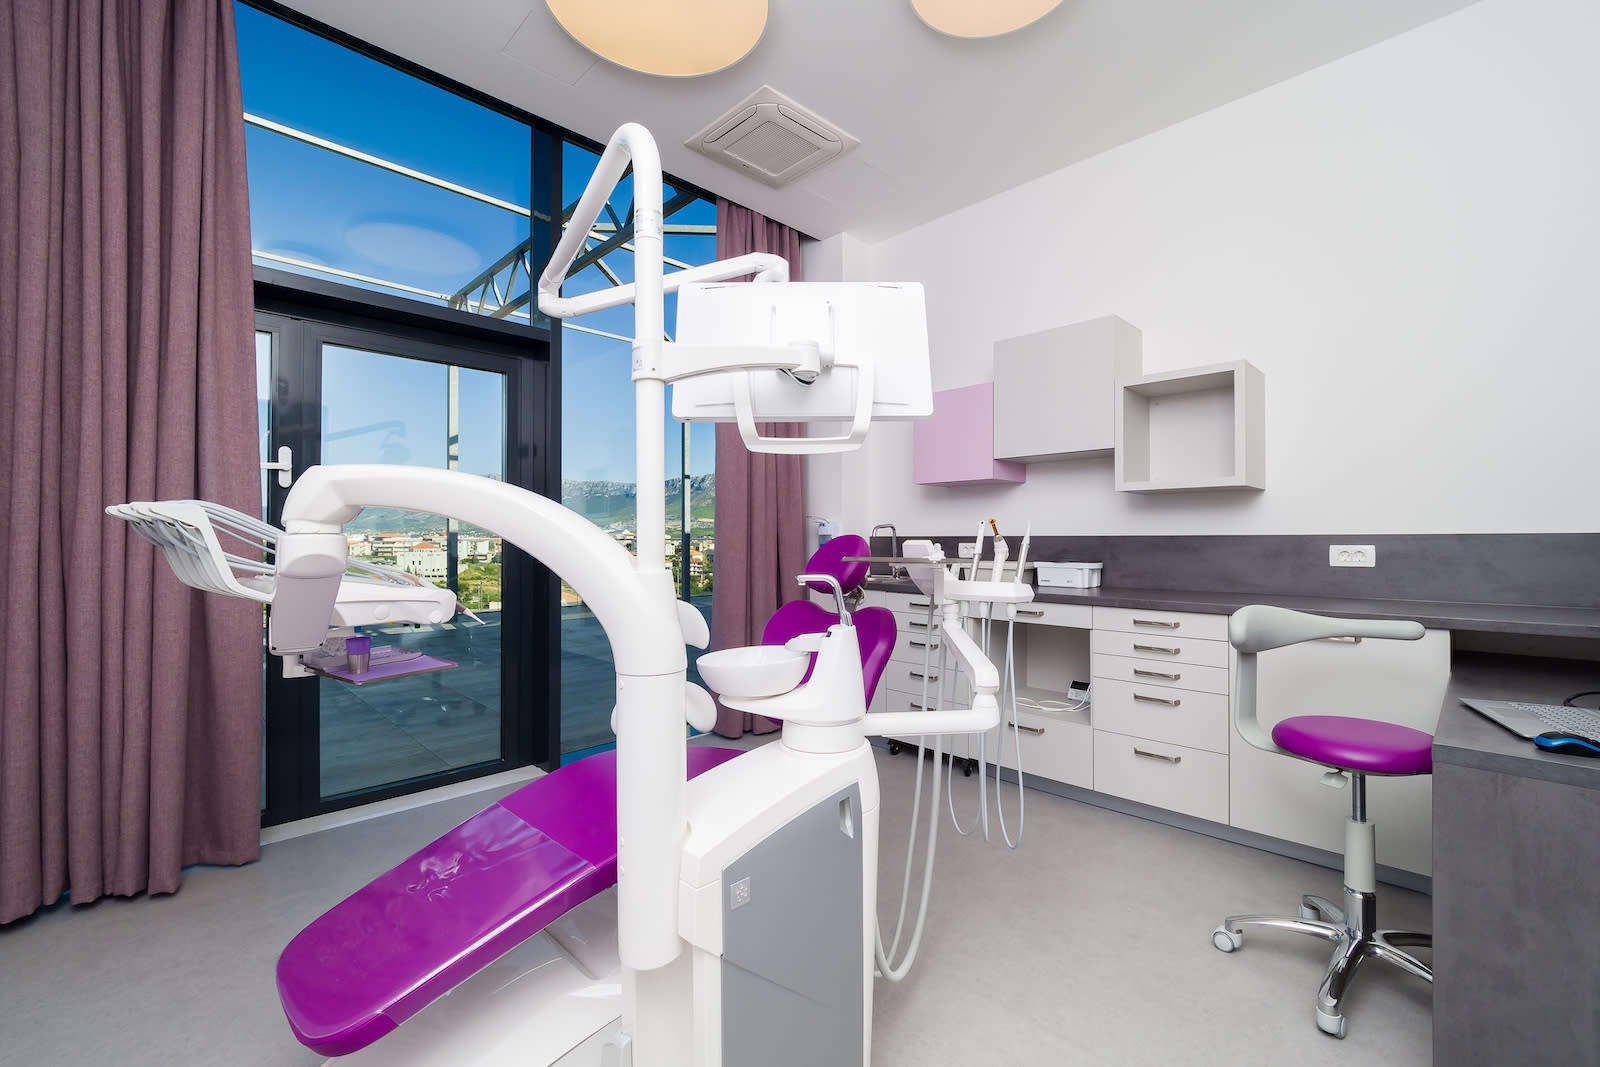 A modern dental treatment room at Dentelli clinic in Split, Croatia.